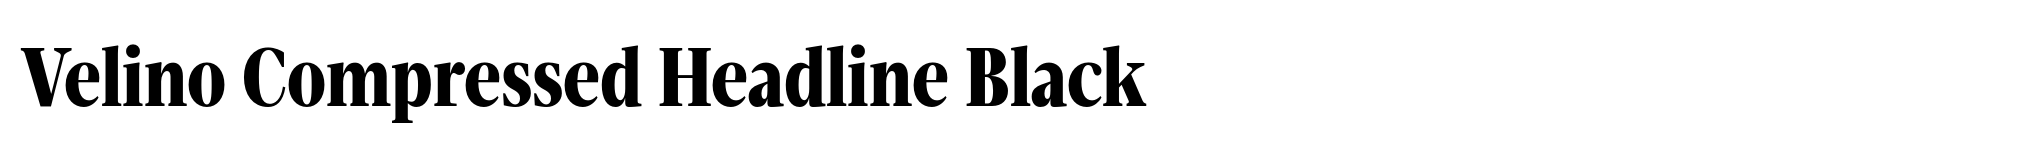 Velino Compressed Headline Black image